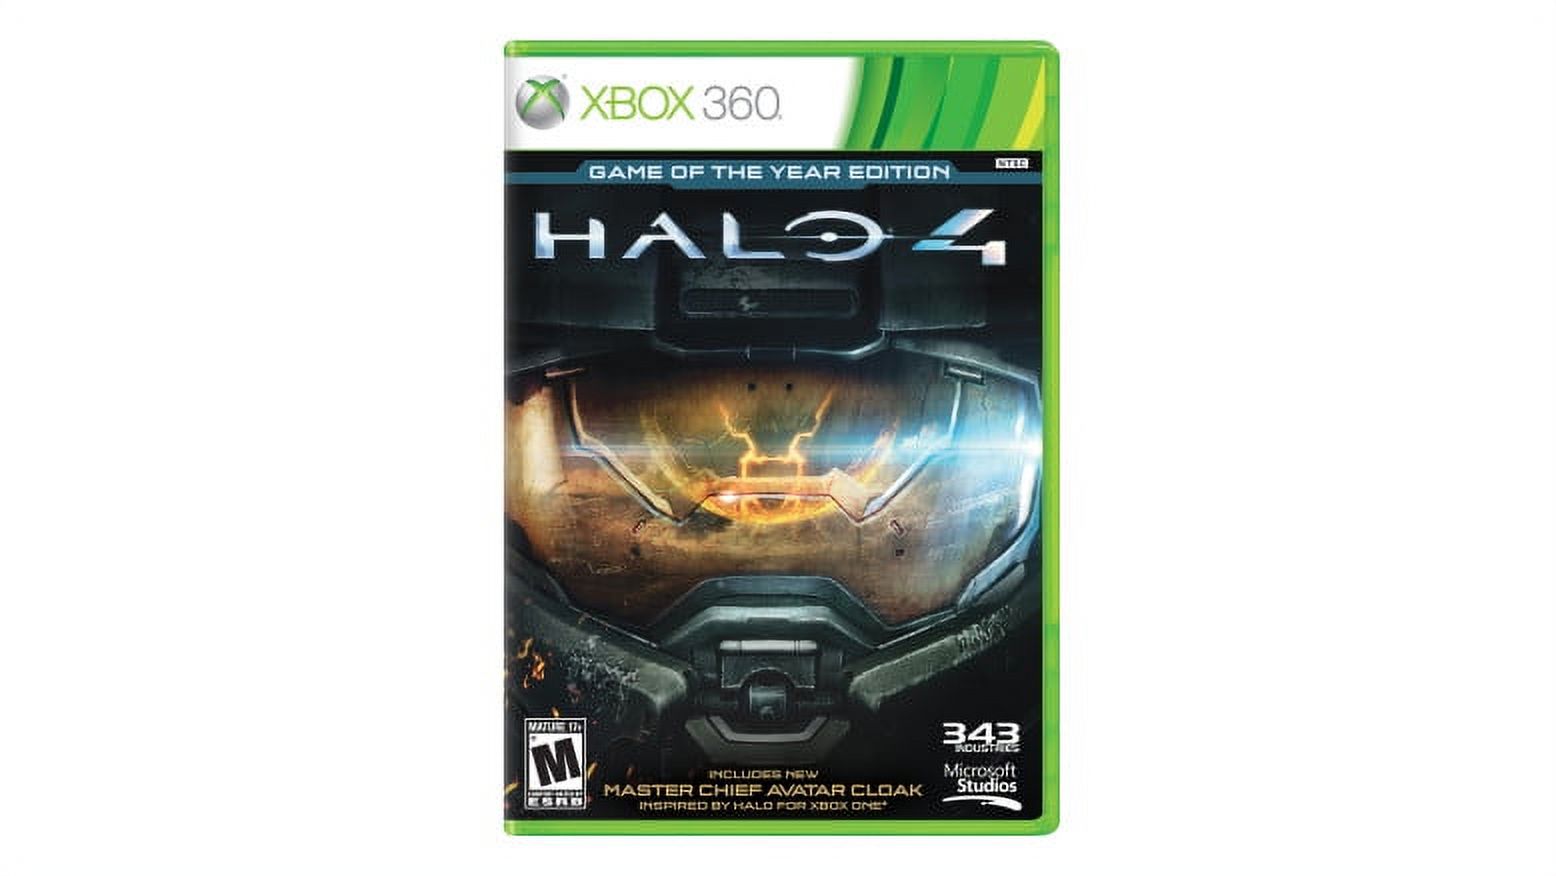 HALO 4 [GOTY], Microsoft, Xbox 360, 885370670844 - image 2 of 2